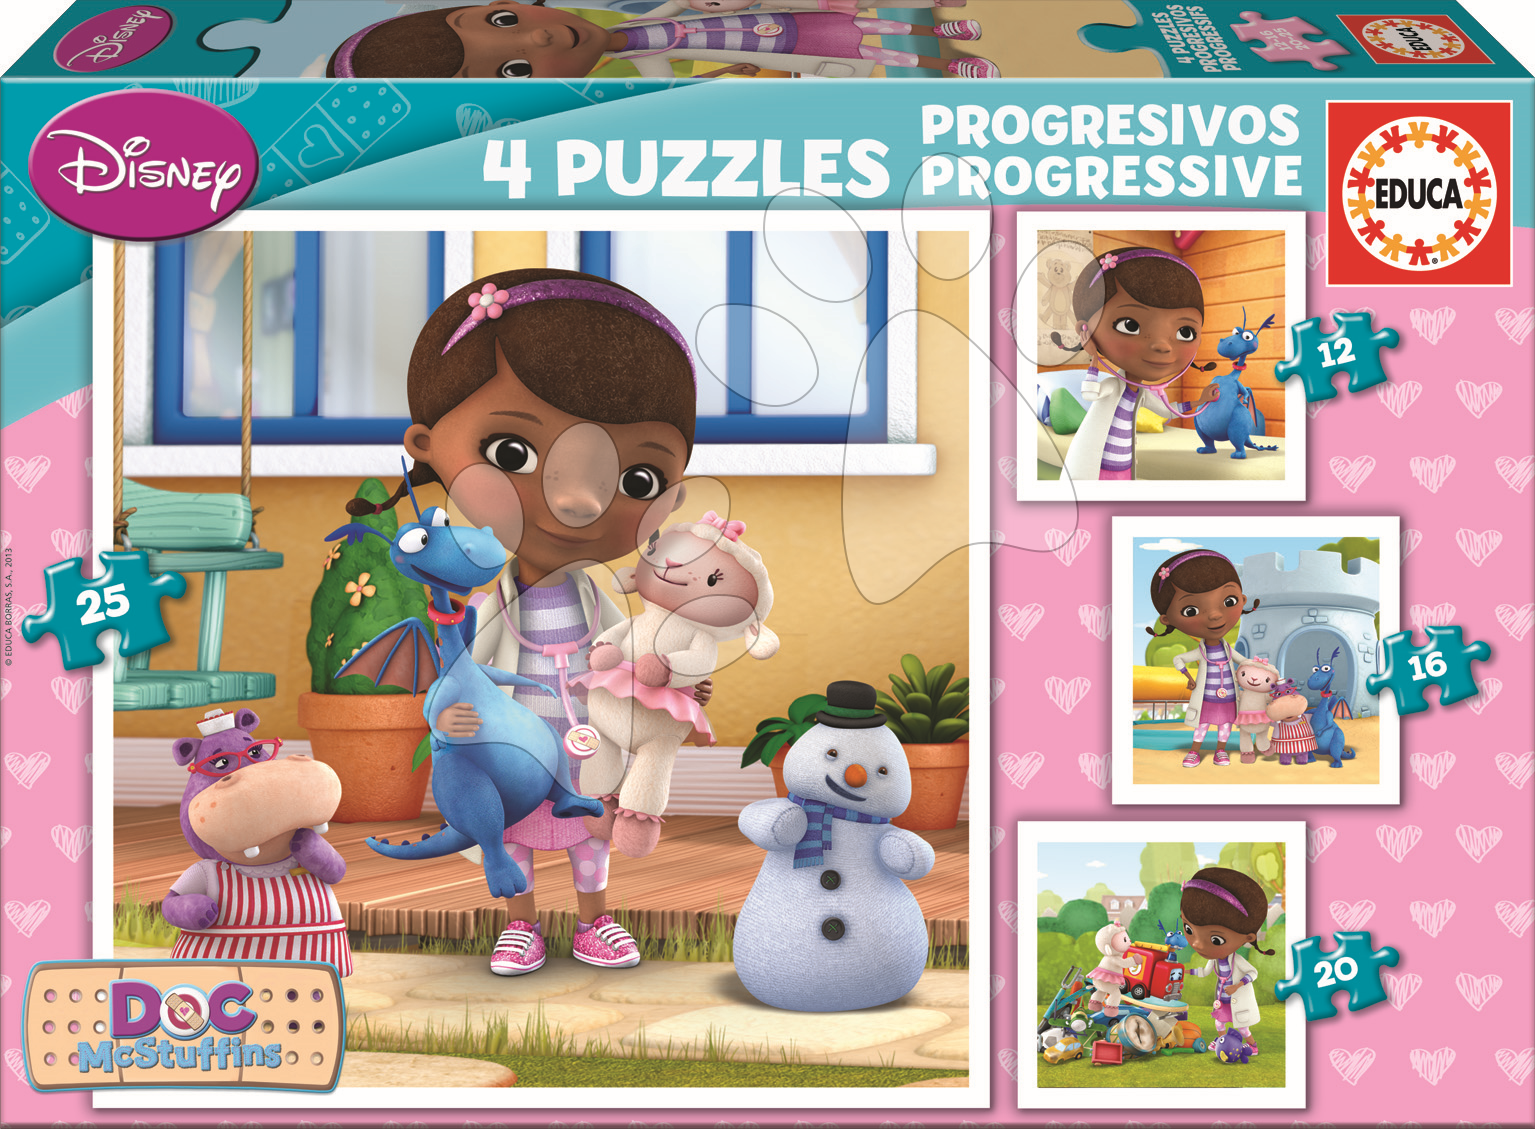 Progresívne detské puzzle - Puzzle Doktorka McStuffins Educa 25-20-16-12 dielov od 24 mes